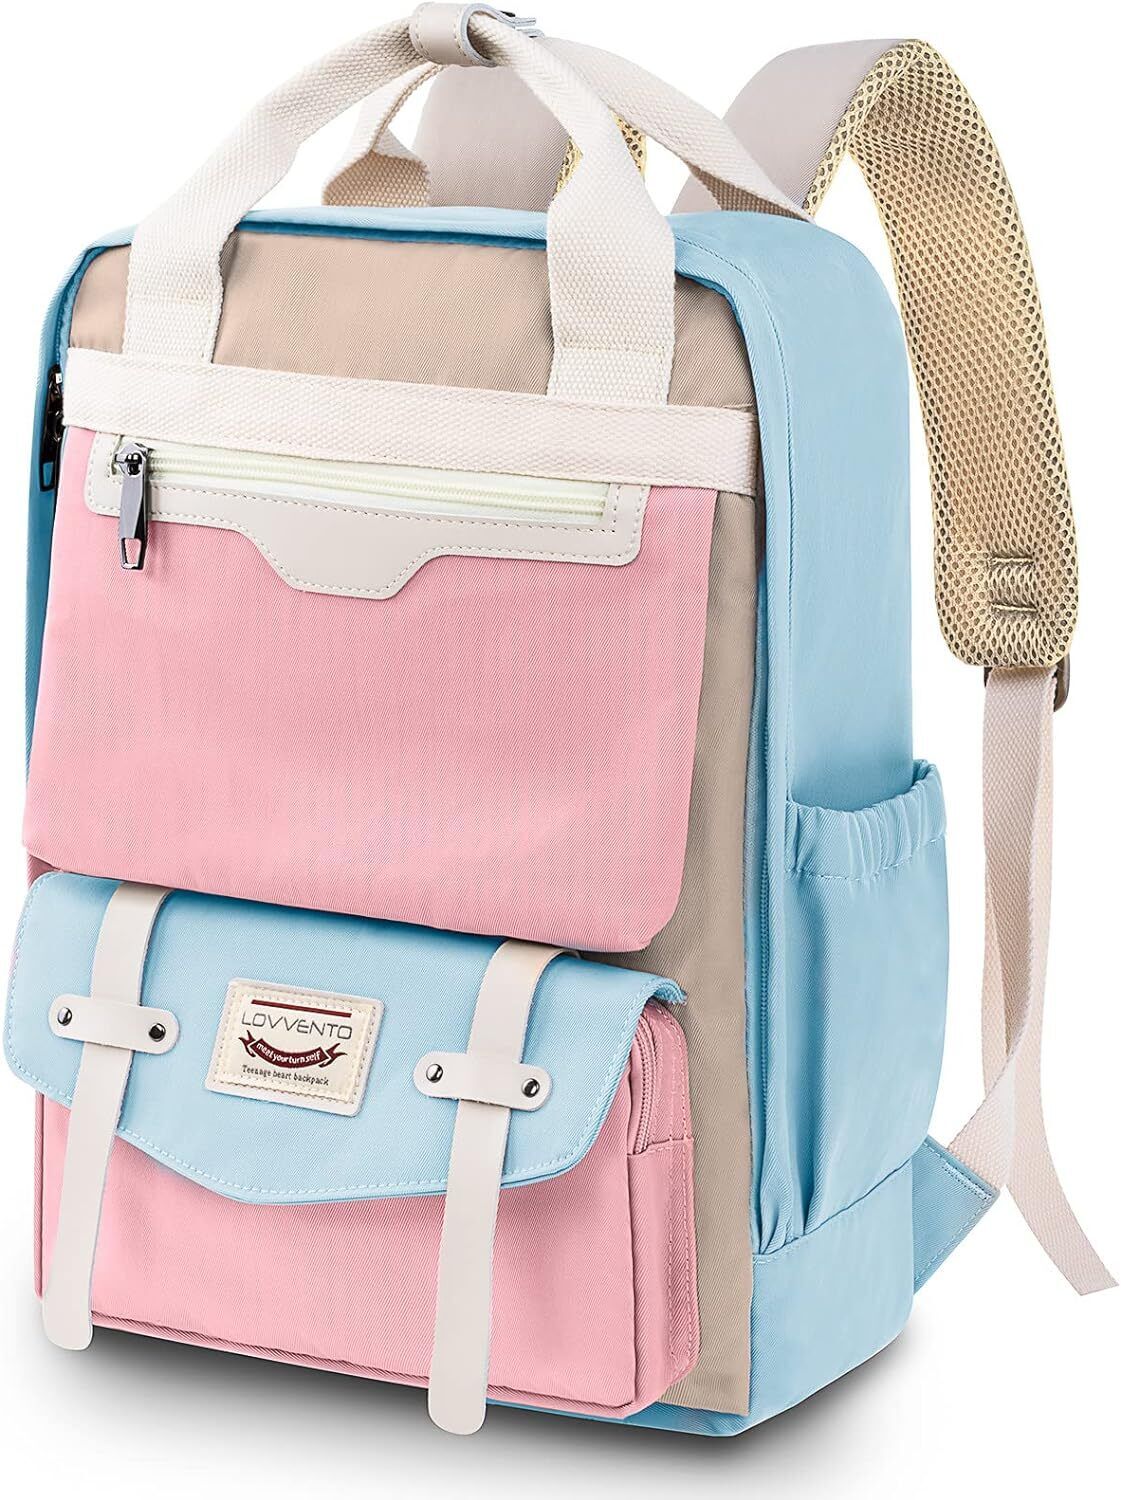 Lovvento College Backpack for Women Cute Vintage Travel Bag 2-pink Blue 